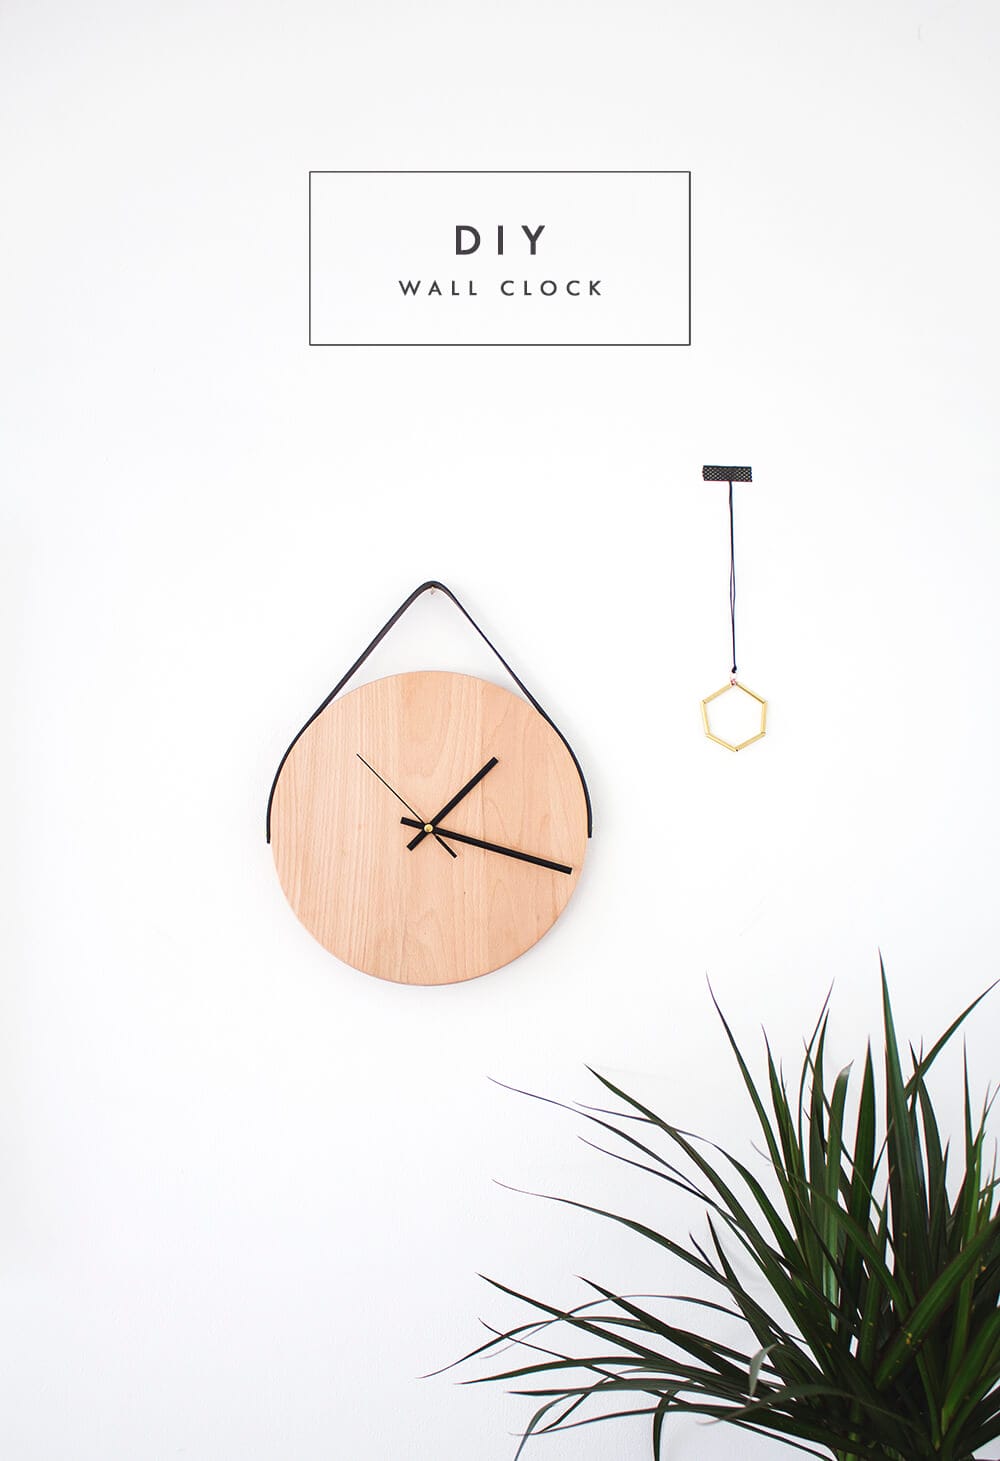 3d diy digital wall clock-show off your ideas